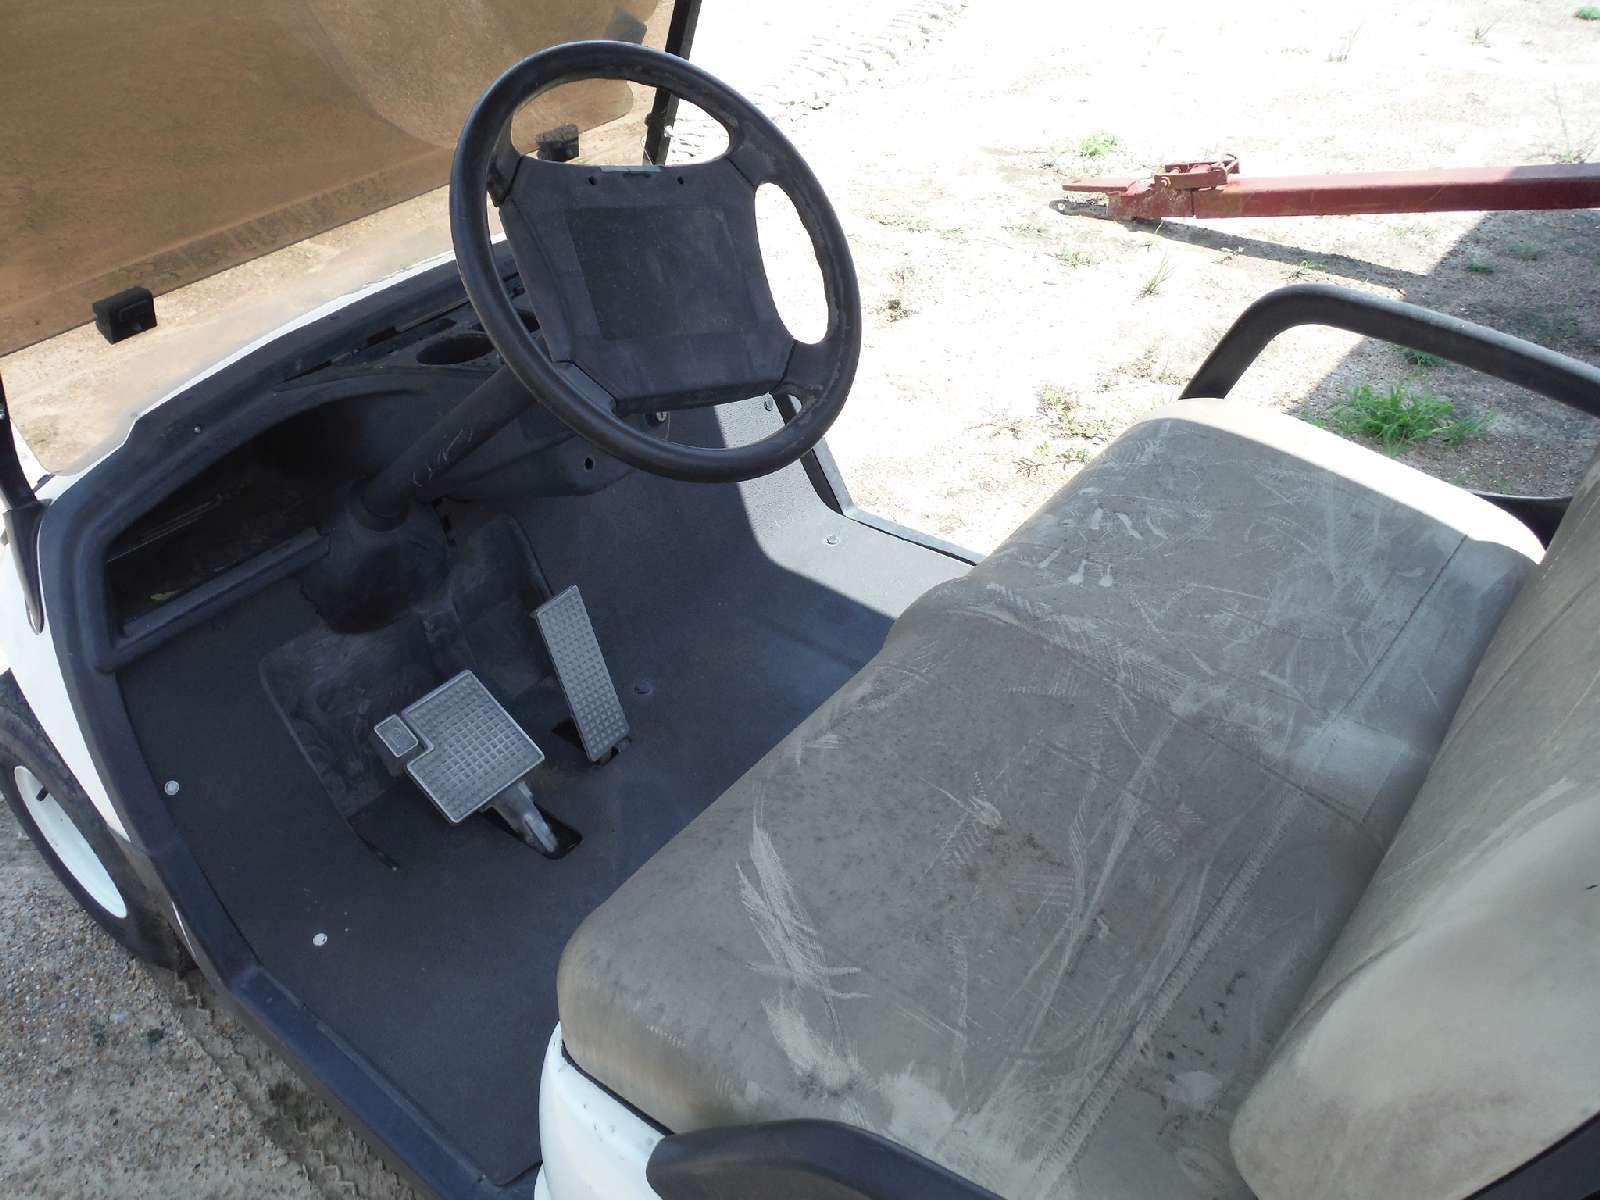 Yamaha Electric Golf Cart, s/n JW2-312614 (Salvage - No Title): No Key, No